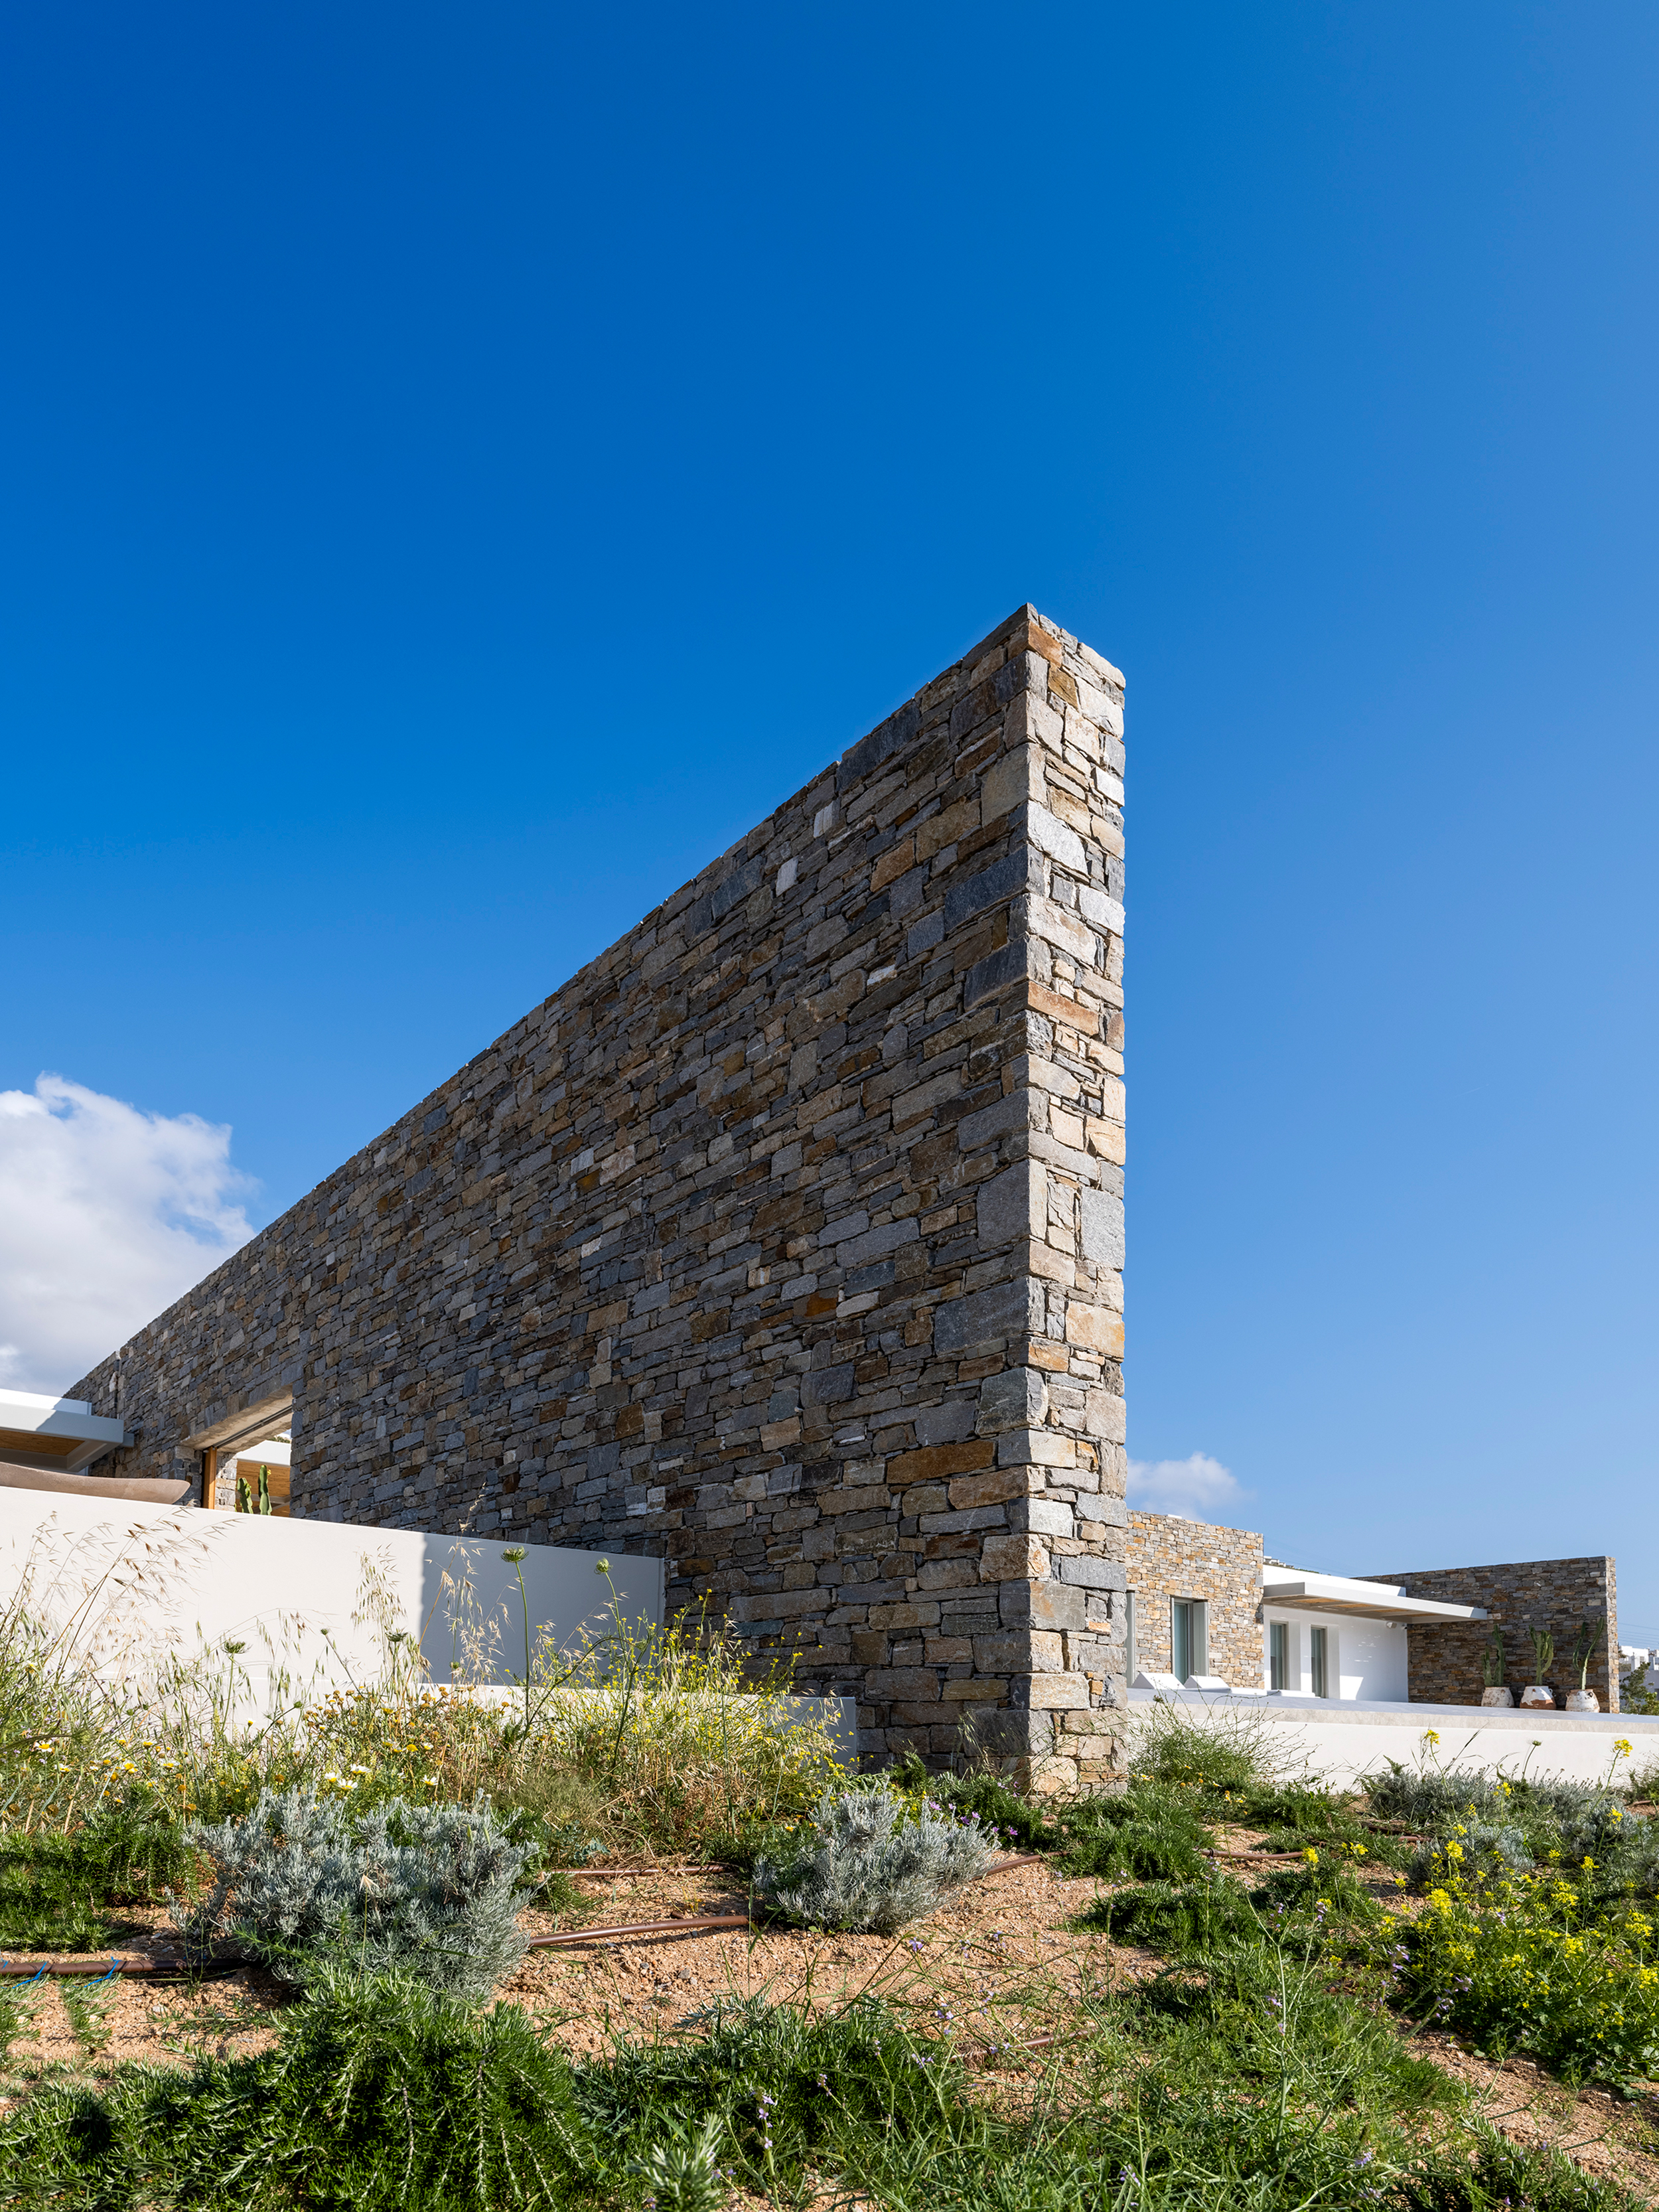 Evripiotis Architects--Open House, Cyclades